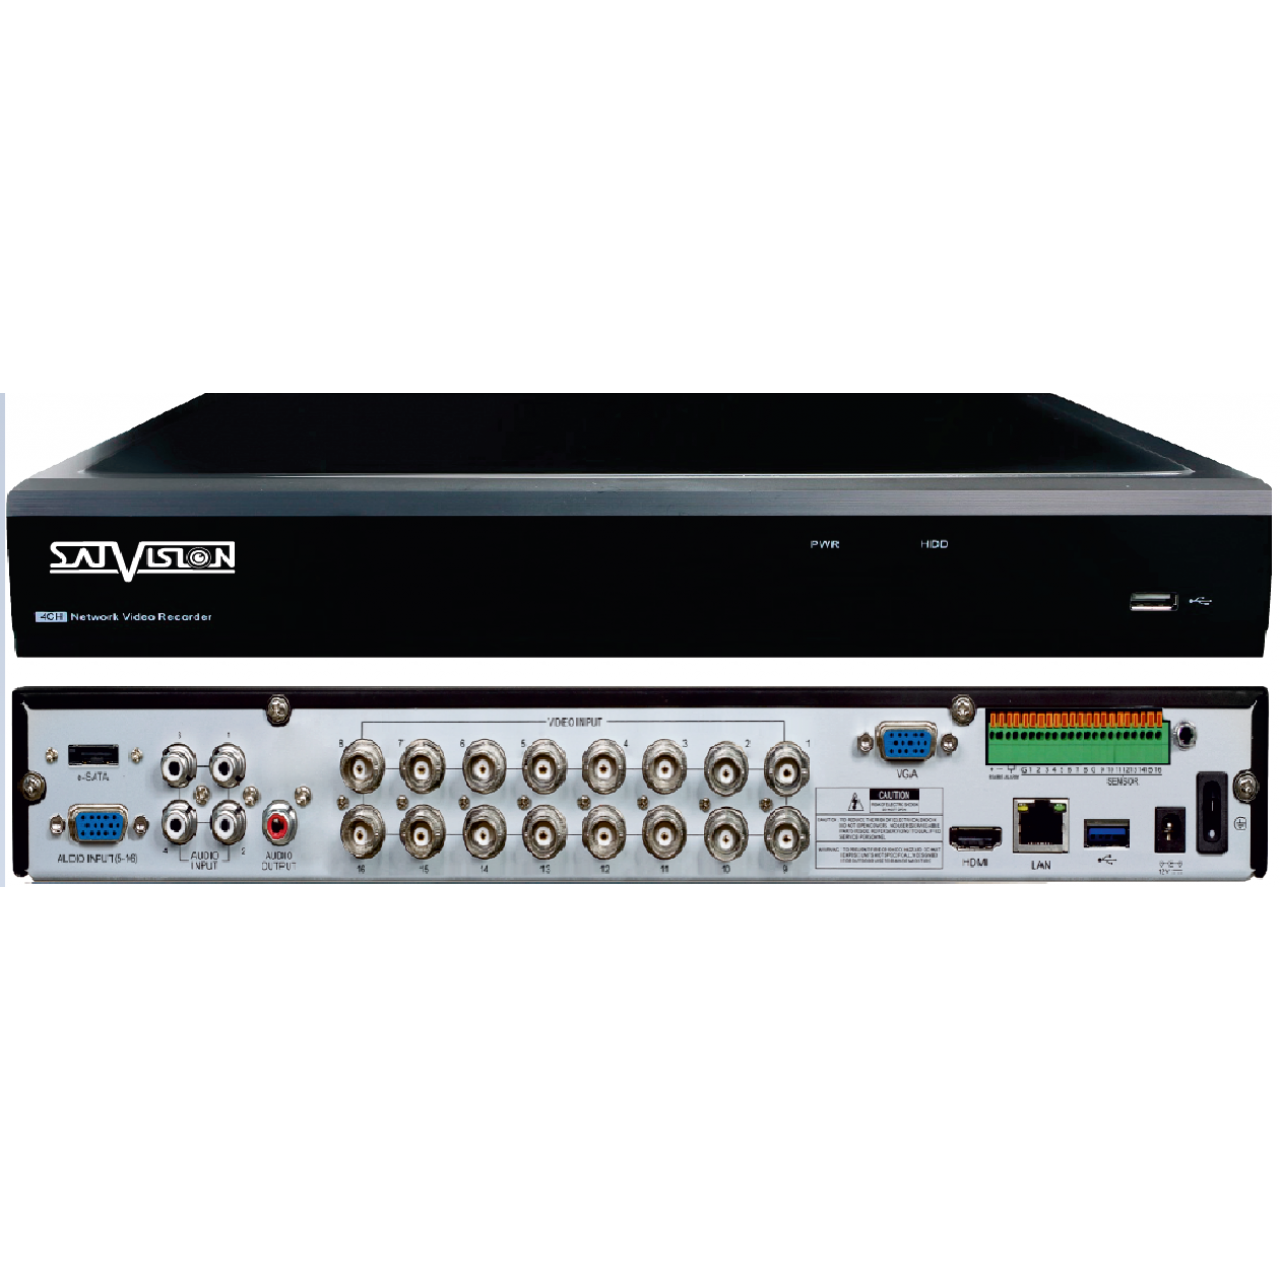 Hybrid 16. Гибридный видеорегистратор на 16 каналов. Видеорегистратор гибридный SVR-4812ah Pro NVMS 9000 2.0. Гибридный видеорегистратор. SATABOX Satvision SATABOX.